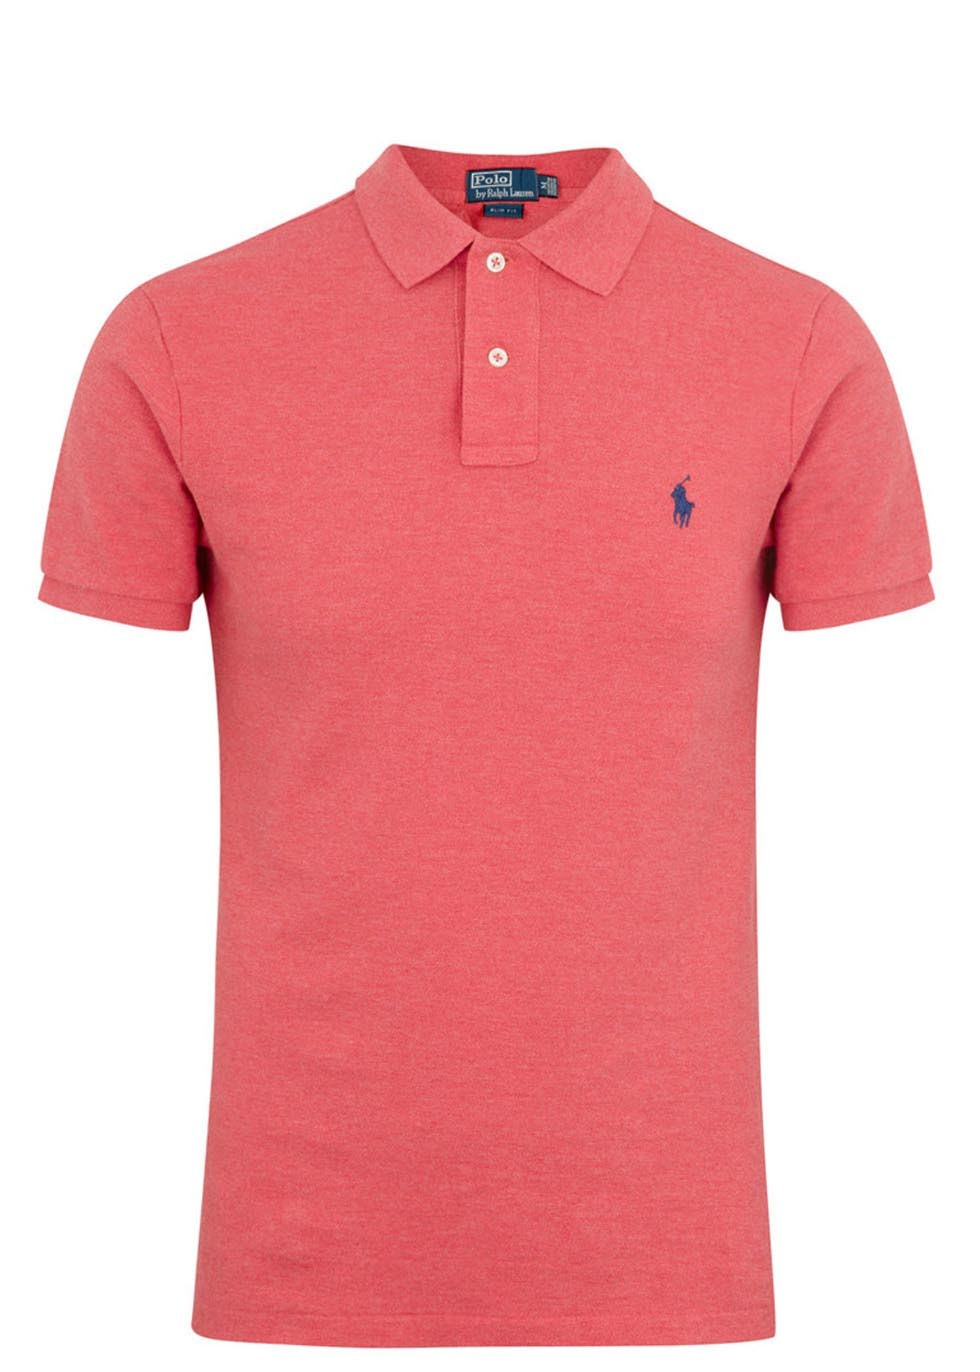 Polo Ralph Lauren Salmon Piqué Cotton Polo Shirt in Pink for Men - Lyst